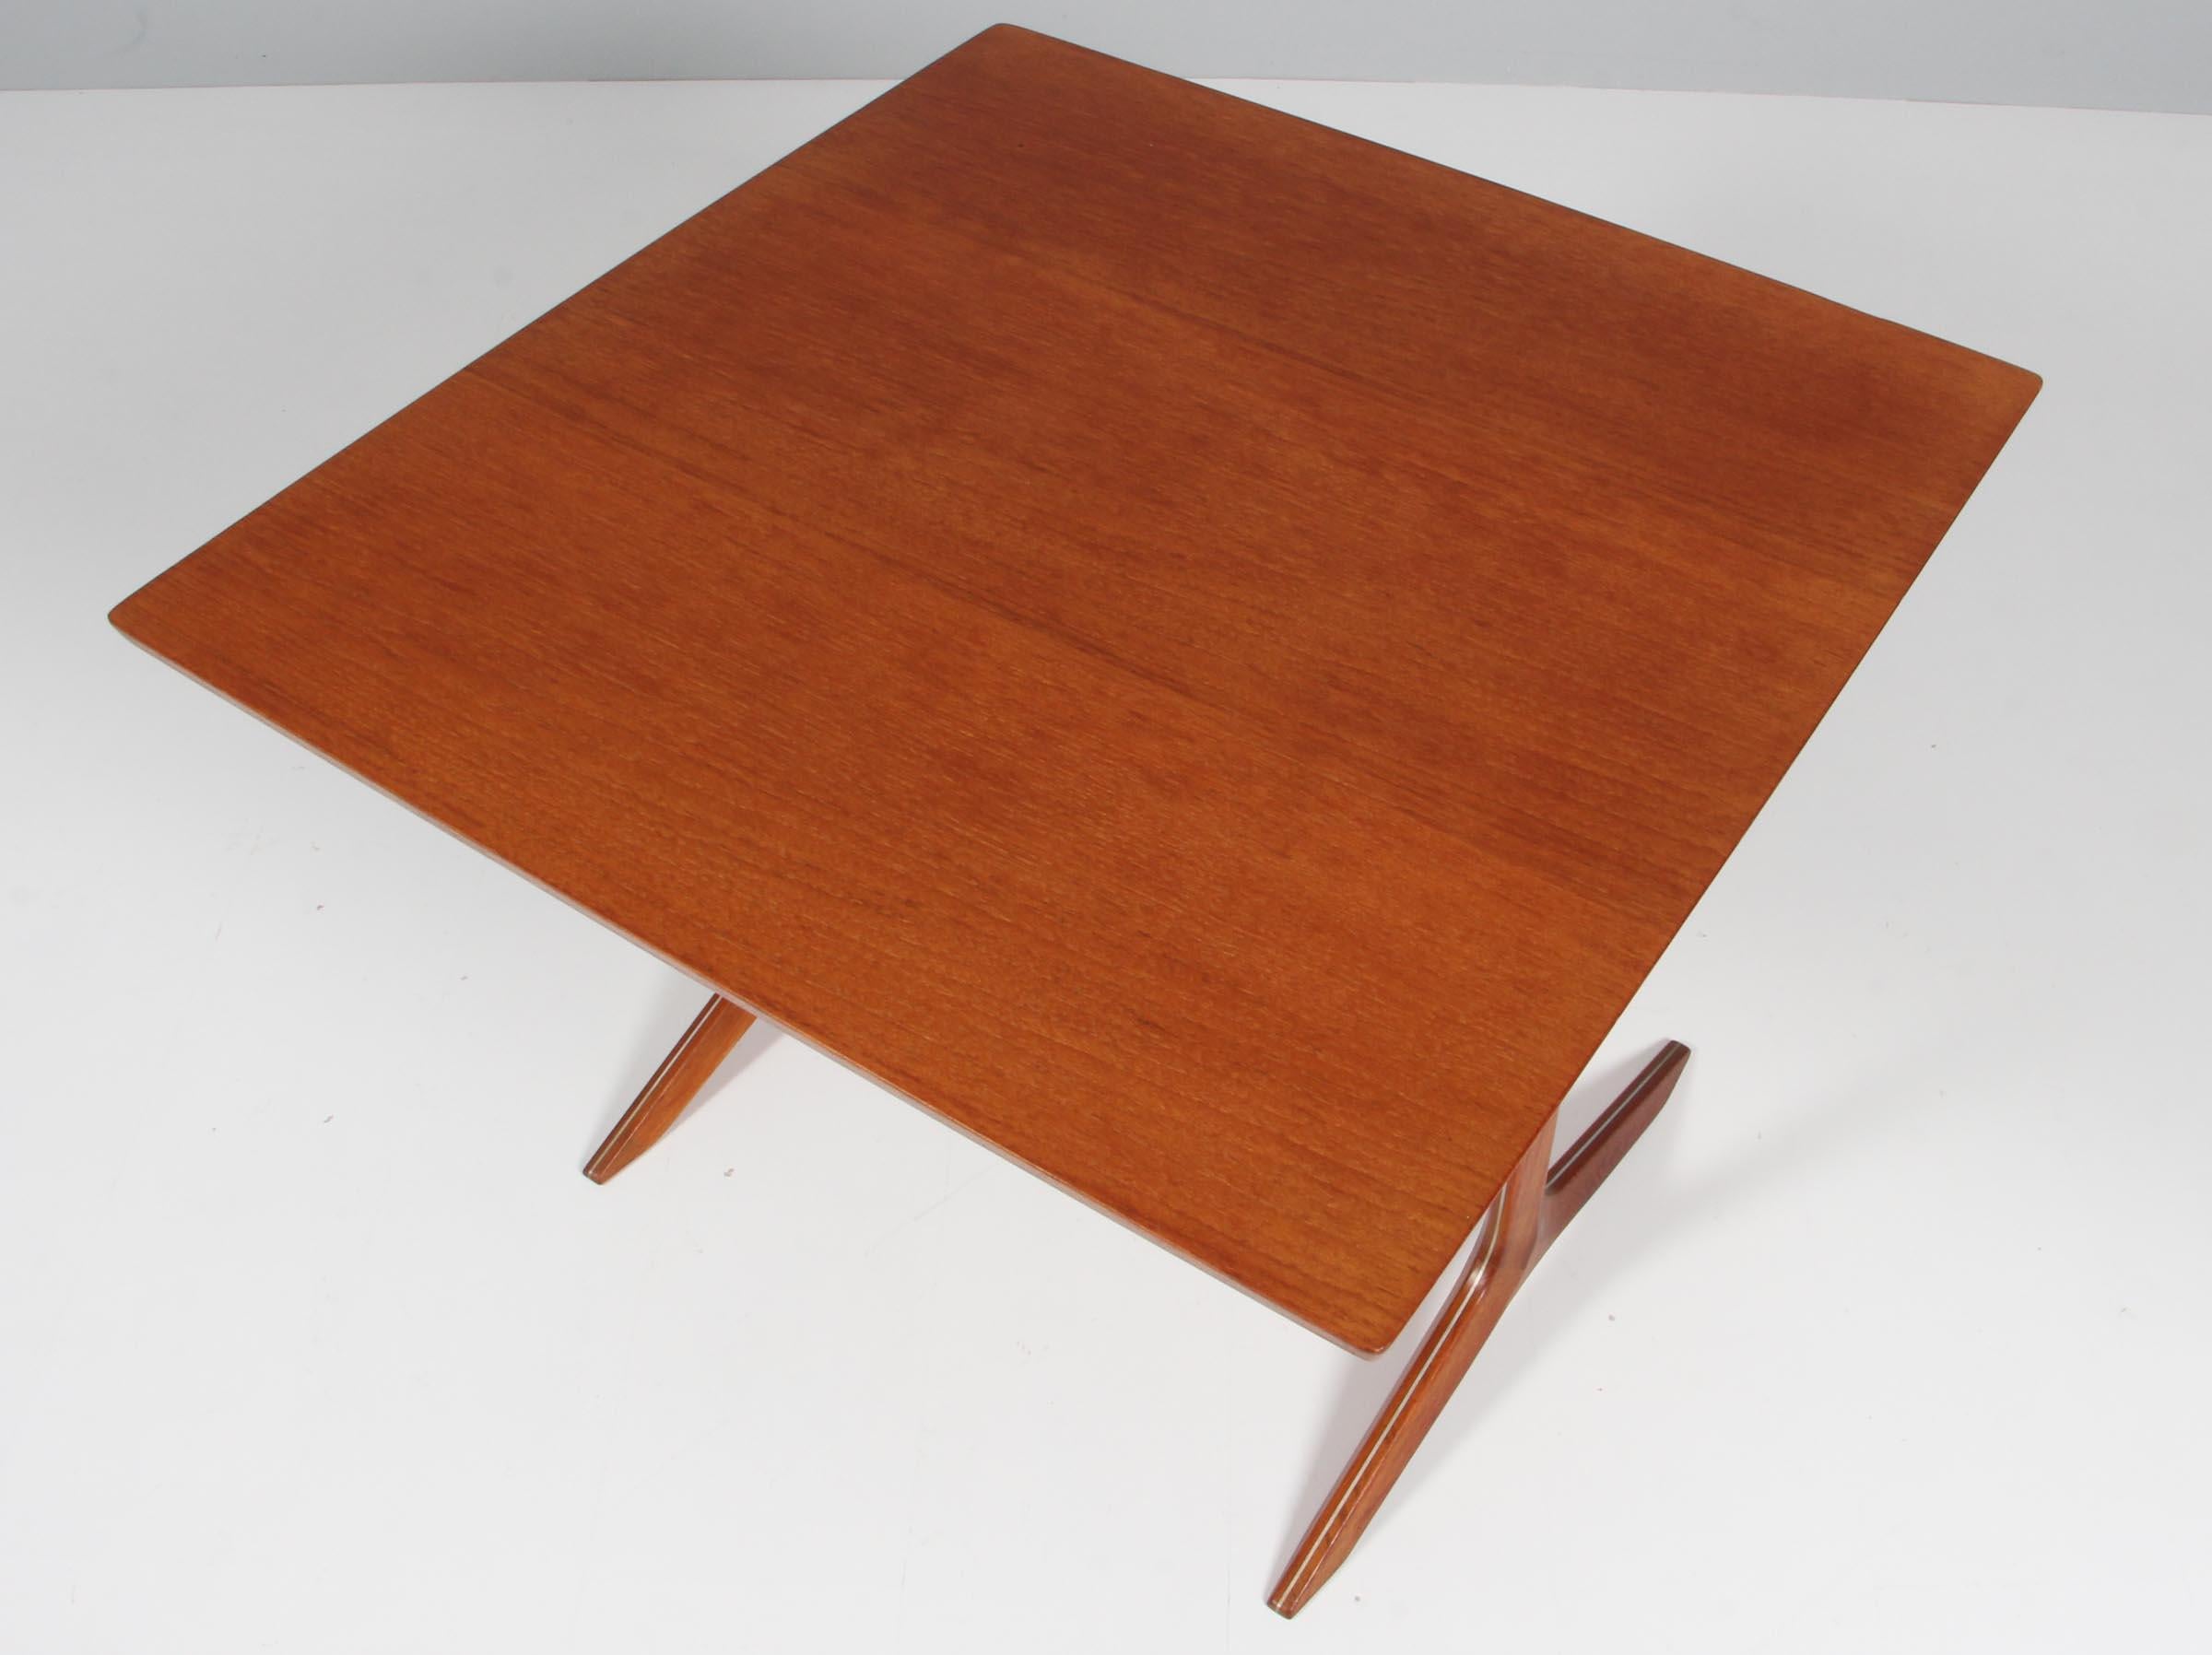 Peter Hvidt & Orla Mølgaard Nielsen side table in partly solid teak

Model Silverline, Made by France & Daverkosen in the 1960s.